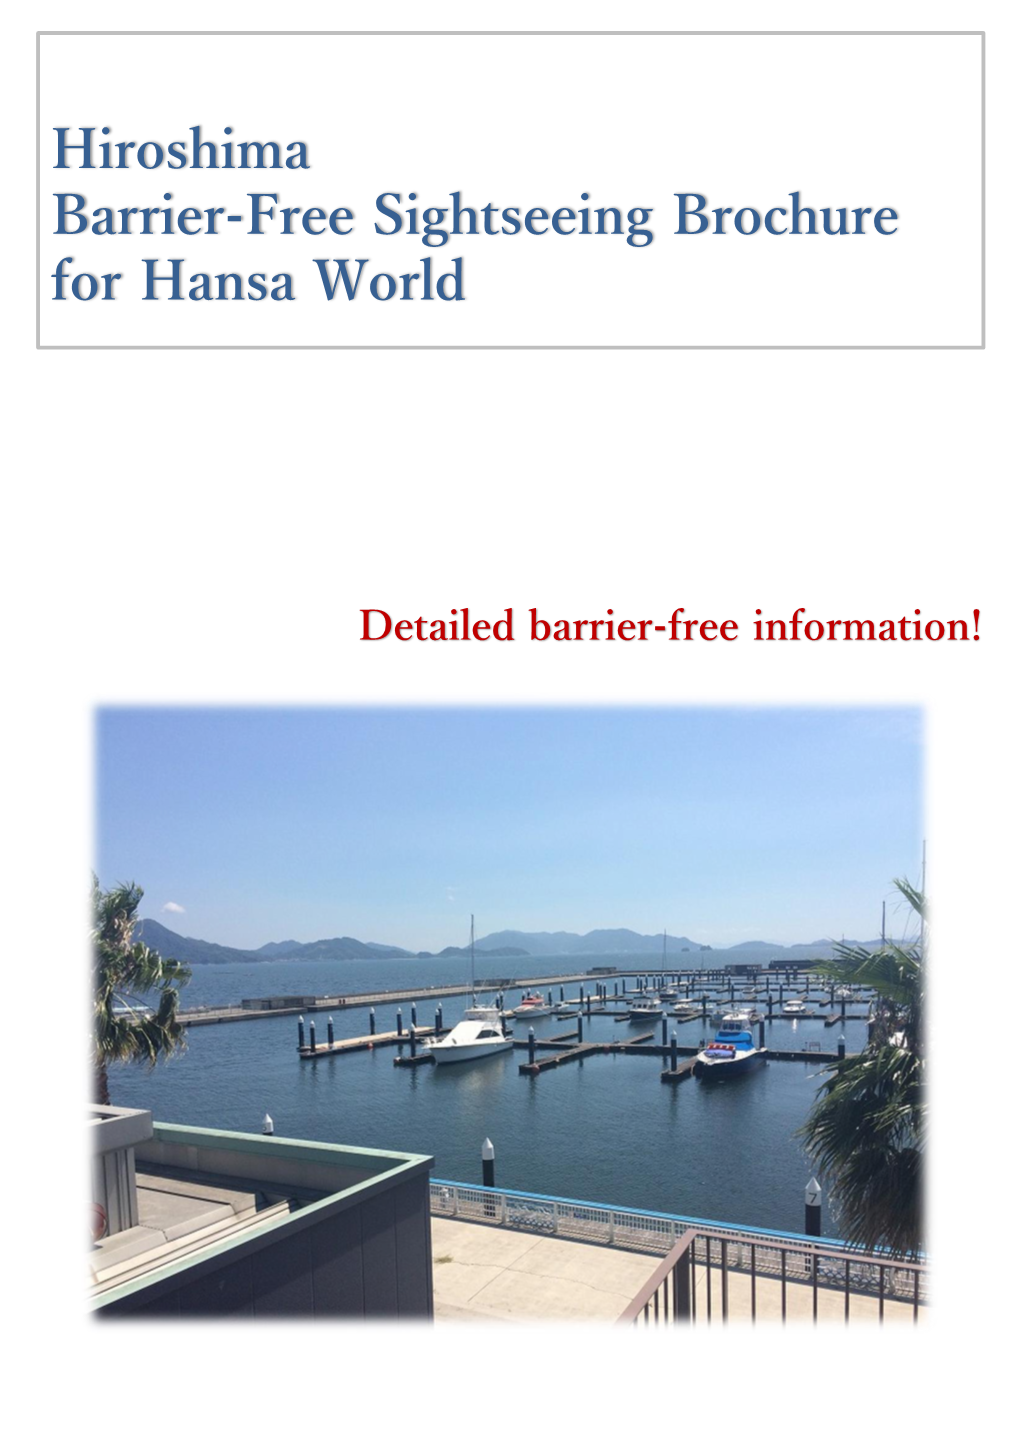 Hiroshima Barrier-Free Sightseeing Brochure for Hansa World